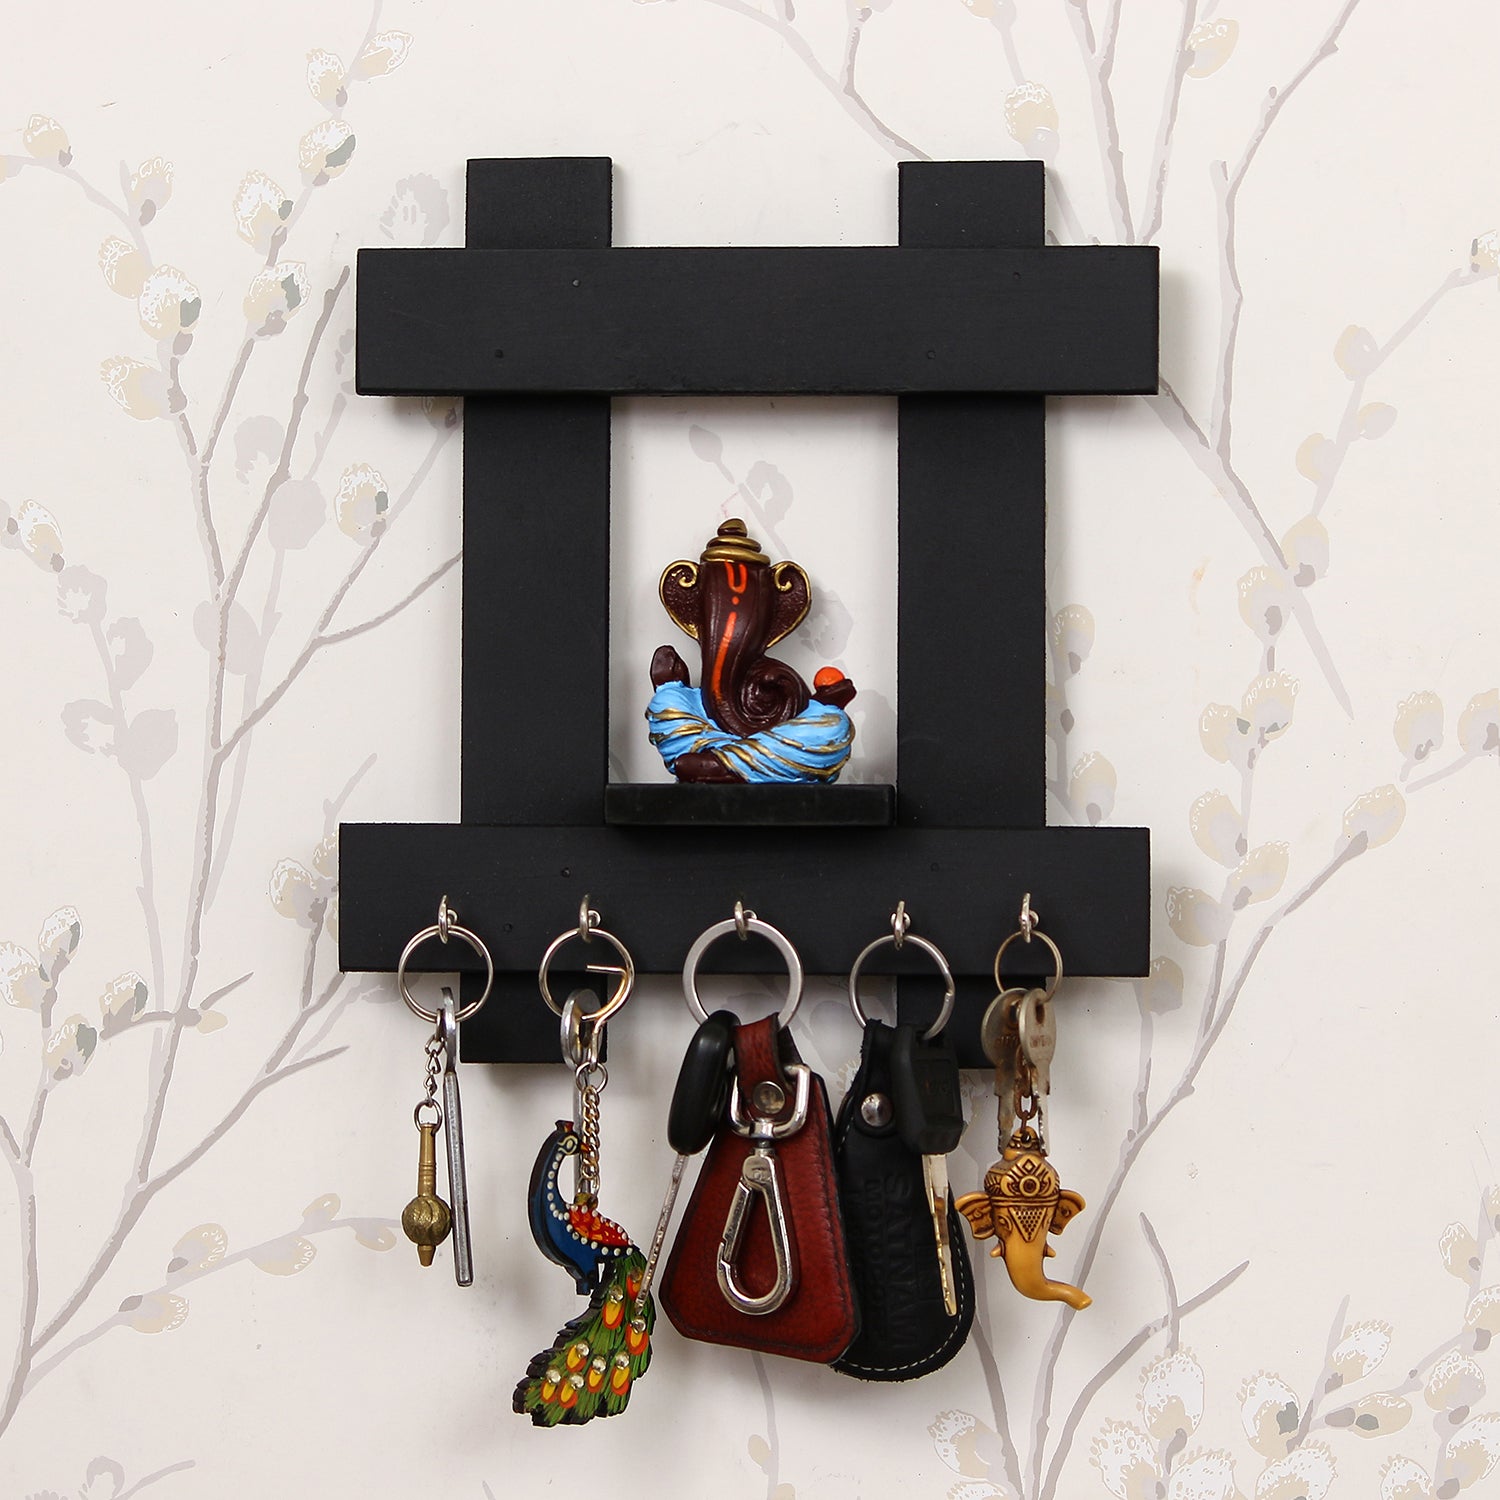 Polyresin Lord Ganesha Idol Wooden Key holder with 5 Key Hooks